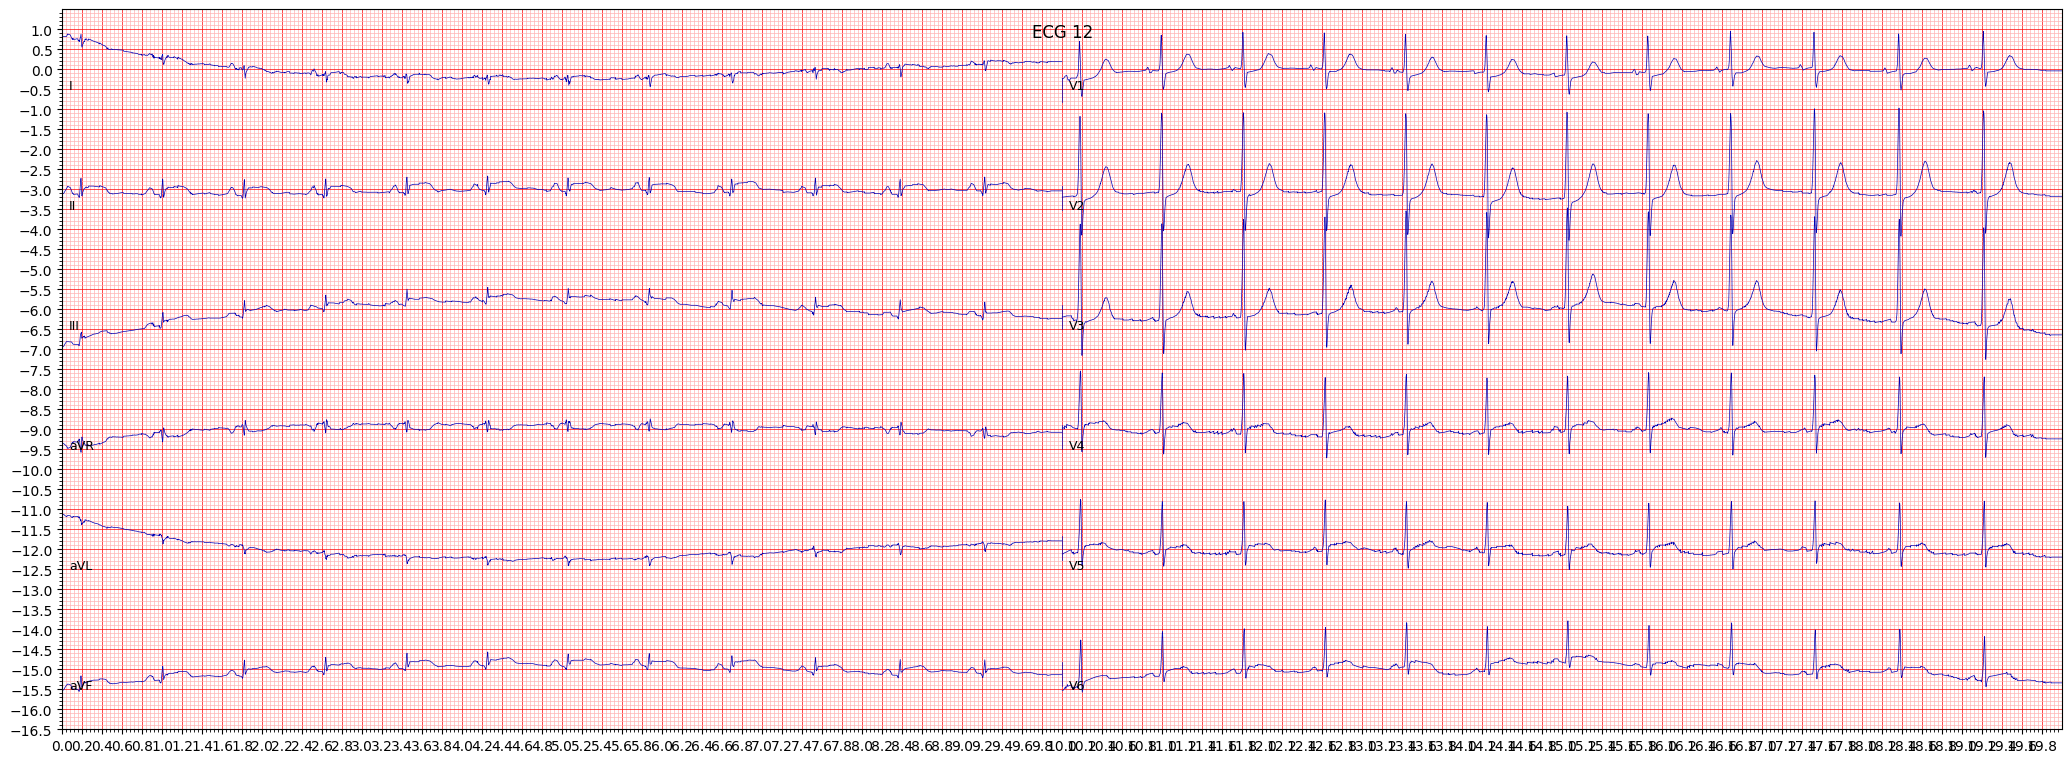 inferolateral myocardial infarction (ILMI) example 947